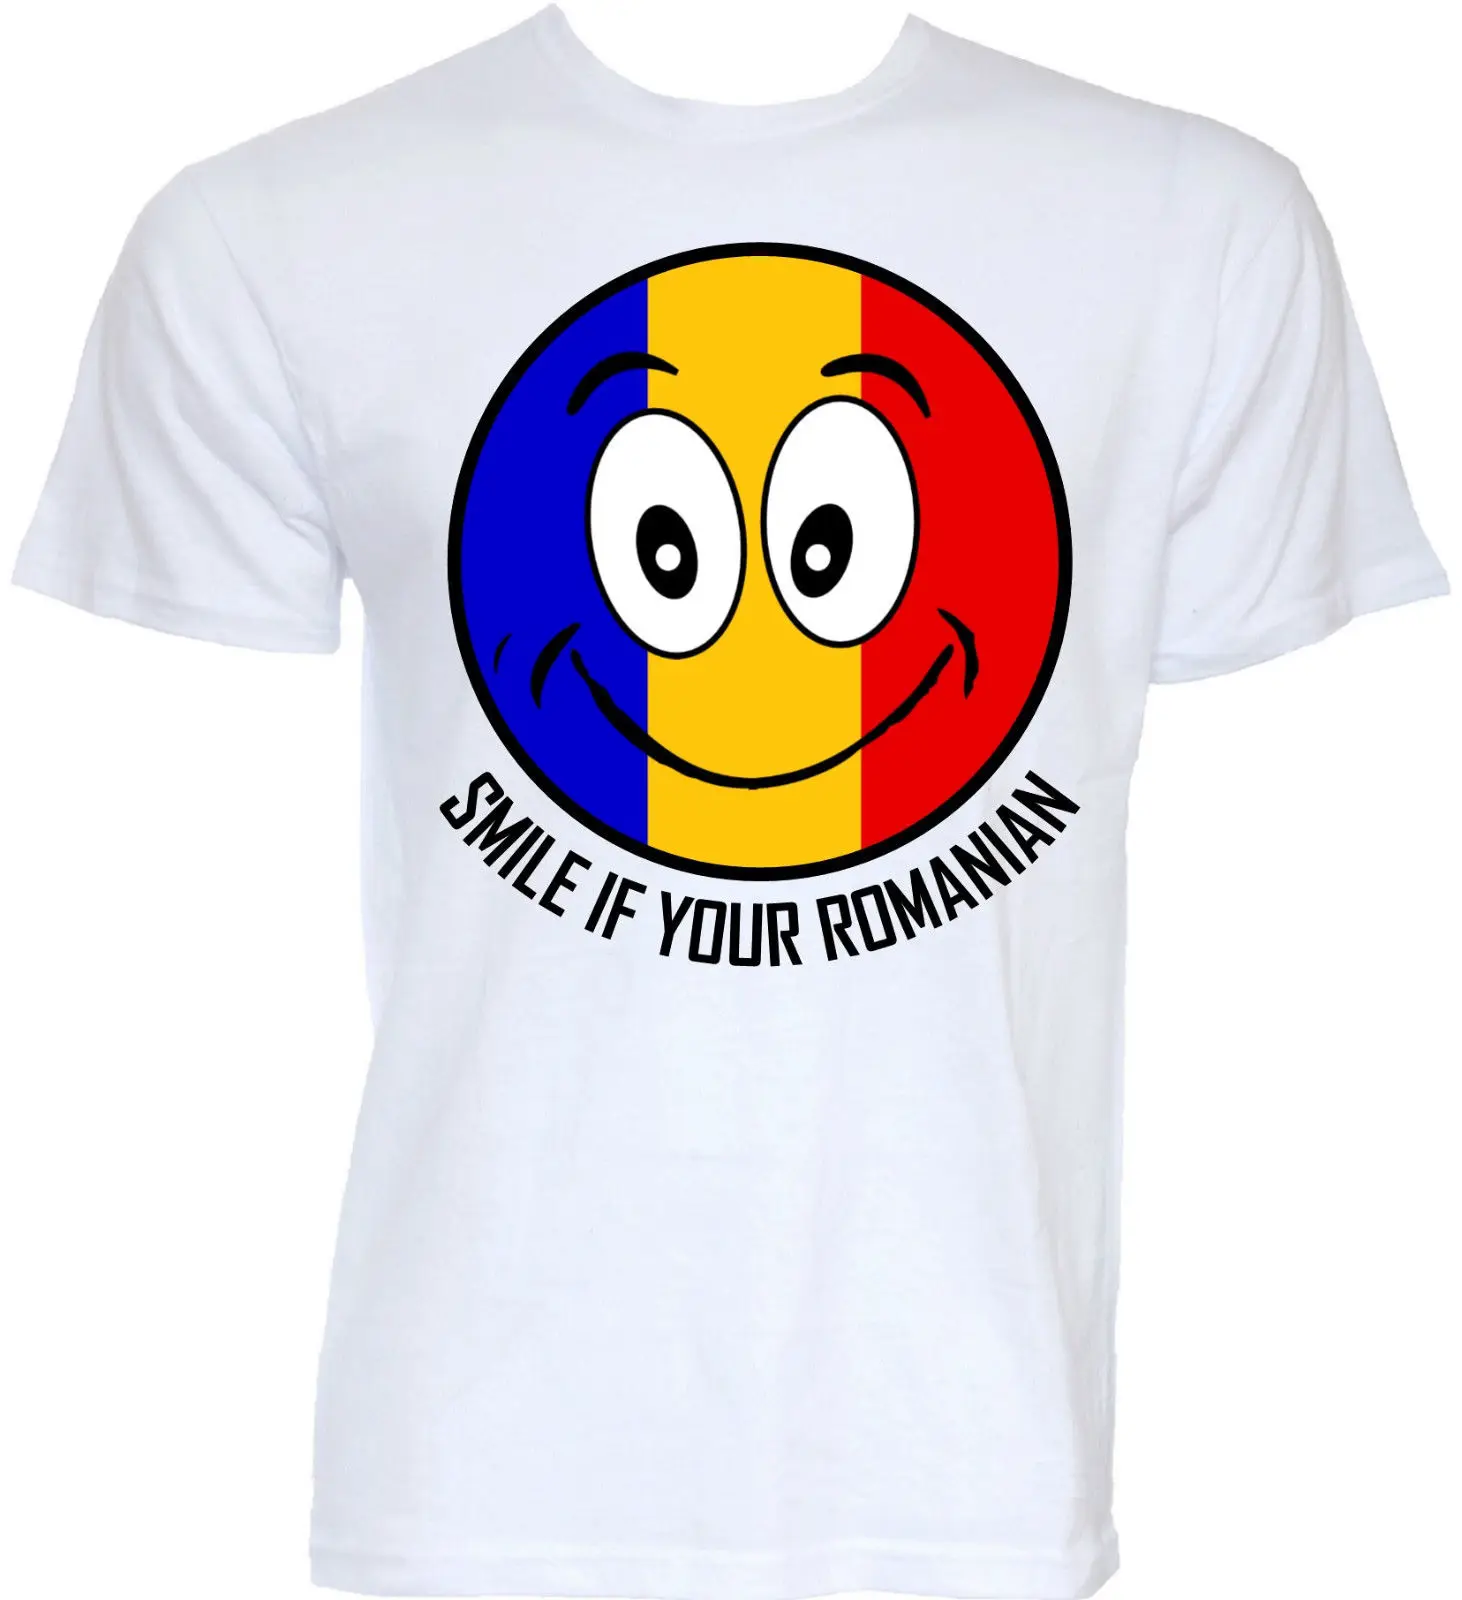 Image MENS FUNNY COOL NOVELTY ROMANIAN ROMANIA FLAG SLOGAN JOKE T SHIRTS GIFTS IDEAS Brand T Shirt Men 2017 Fashion Top Tee